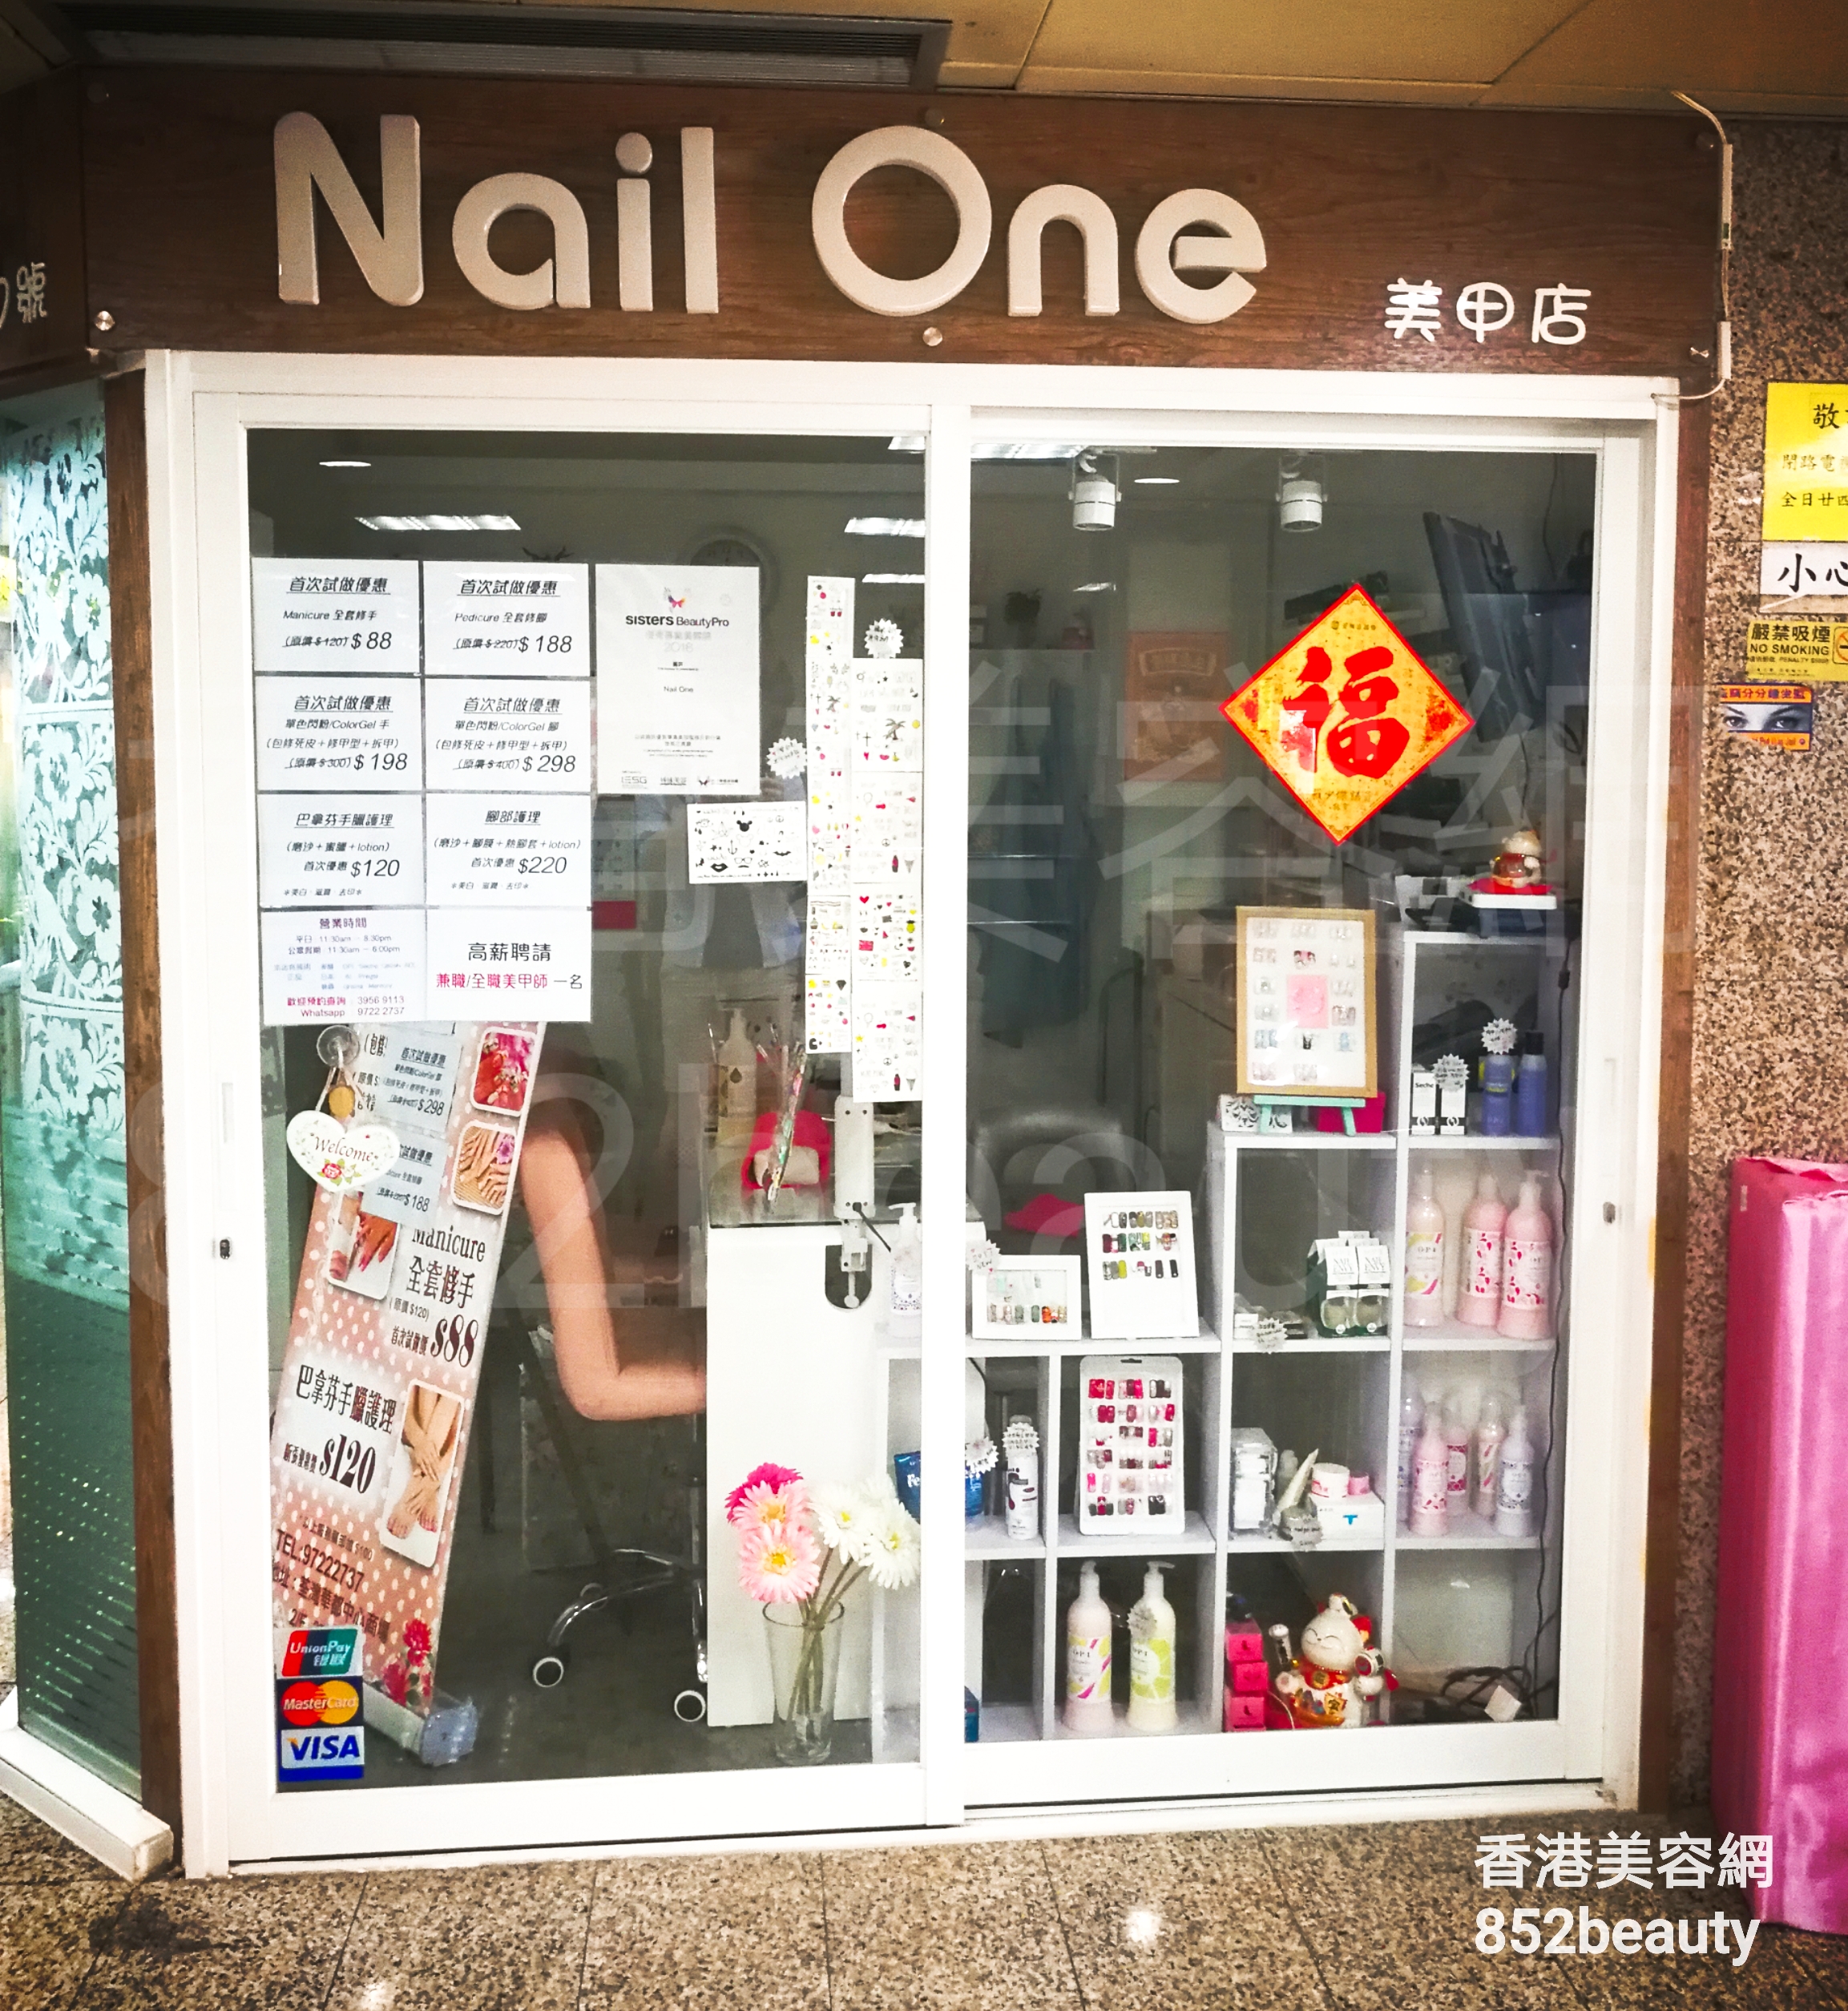 美甲: Nail One 美甲店